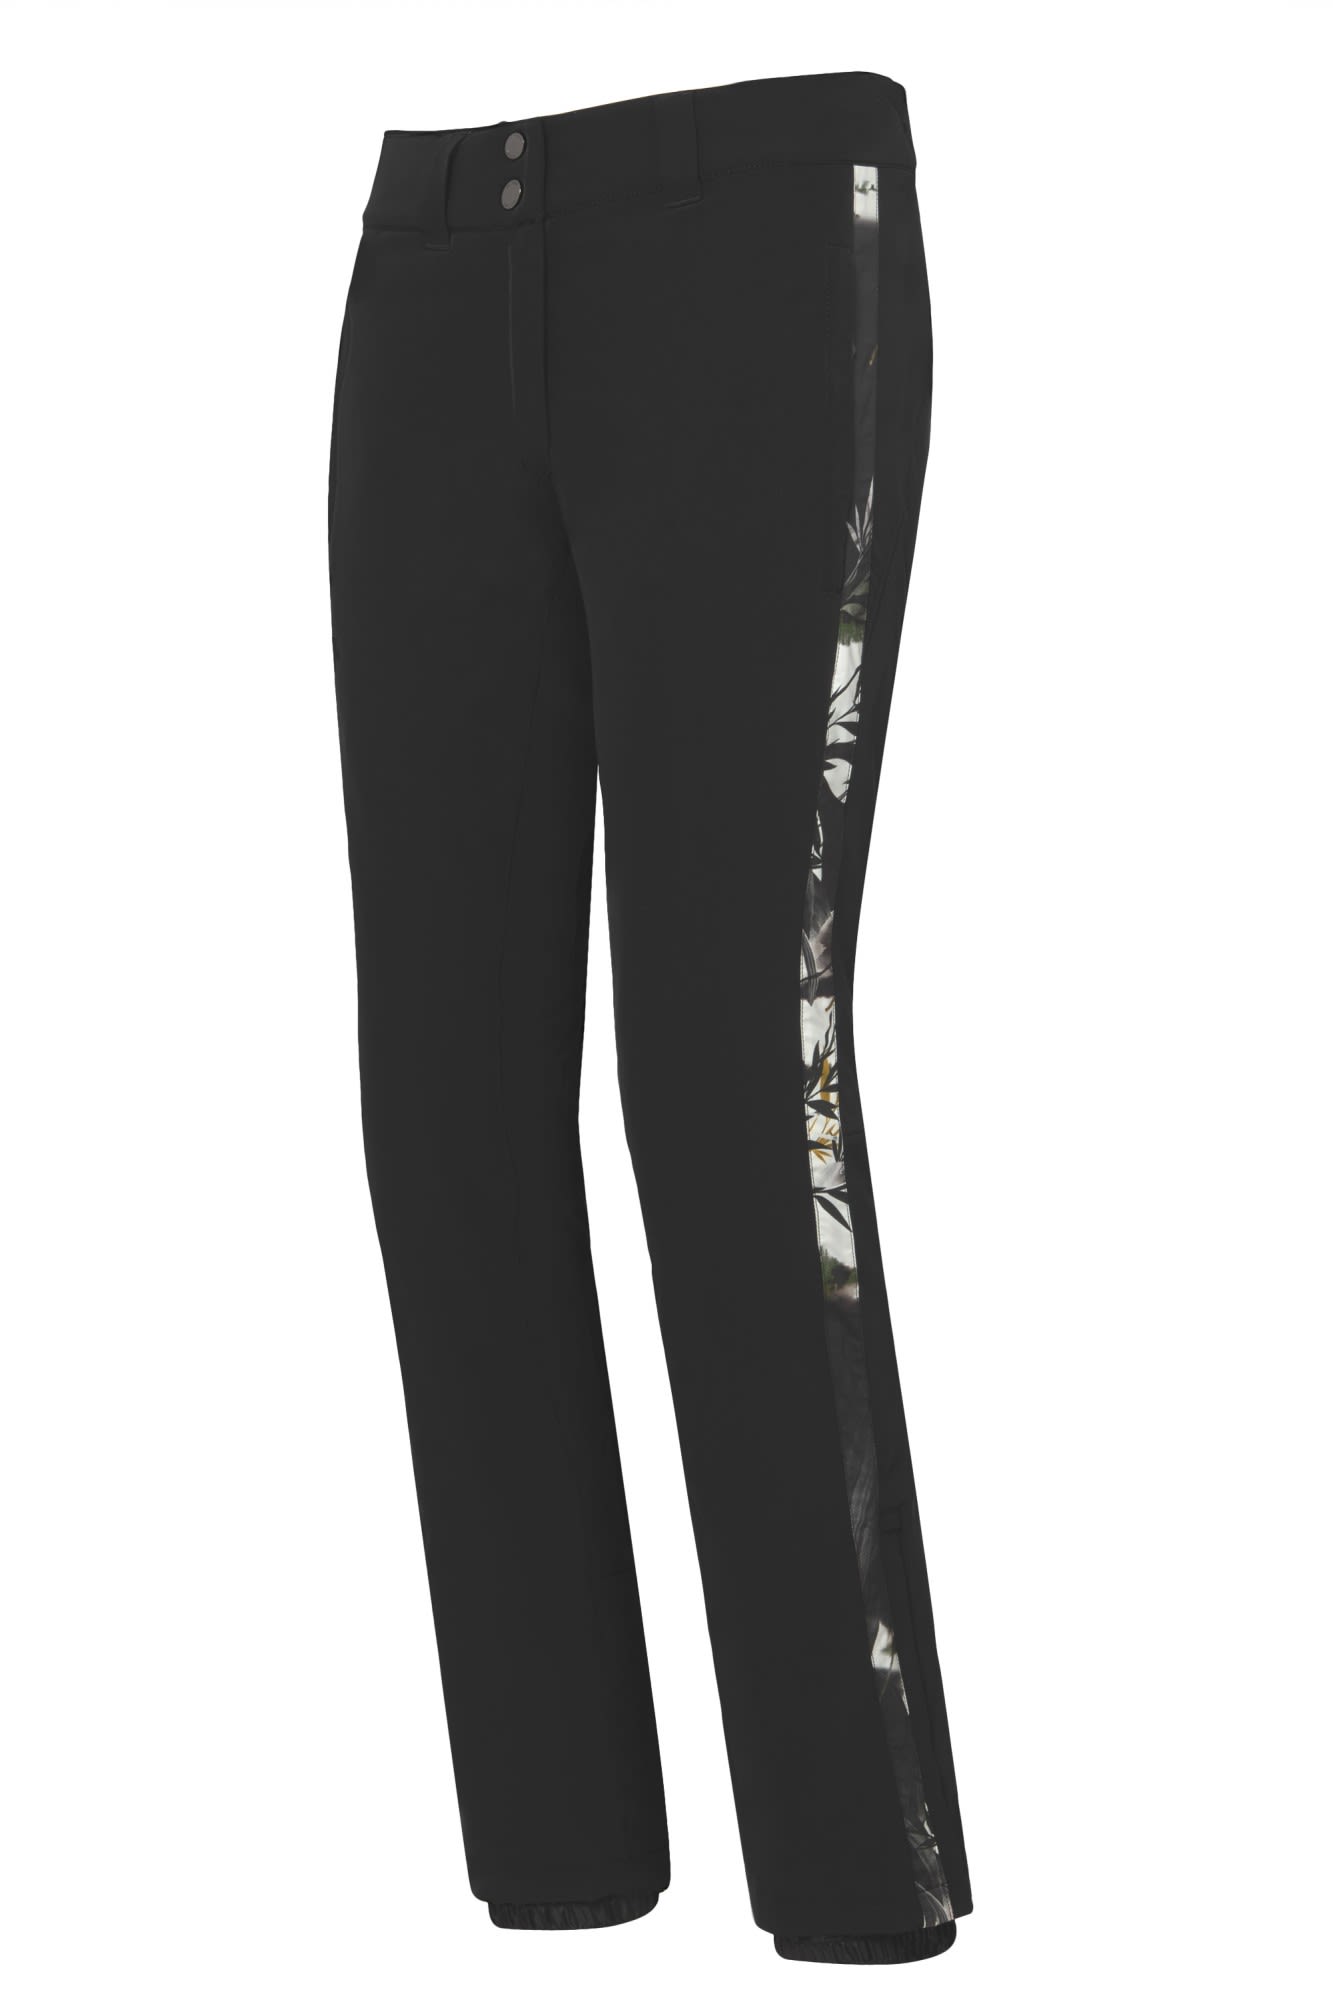 Descente Mona Pant Schwarz- Female Thinsulate- Lange Hosen- Grsse 36 - Farbe Black unter Descente